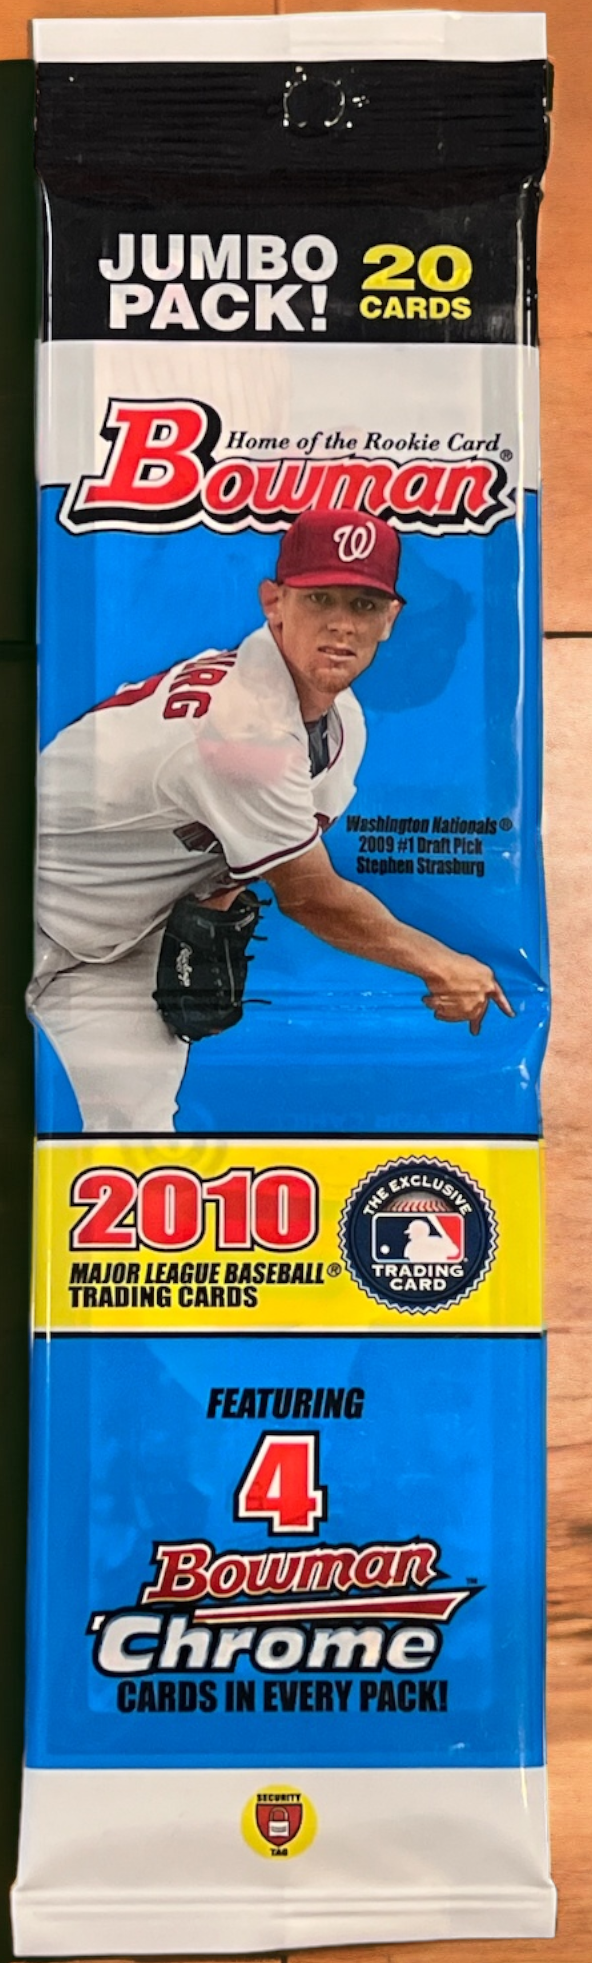 2010 Bowman Baseball Rack Pack